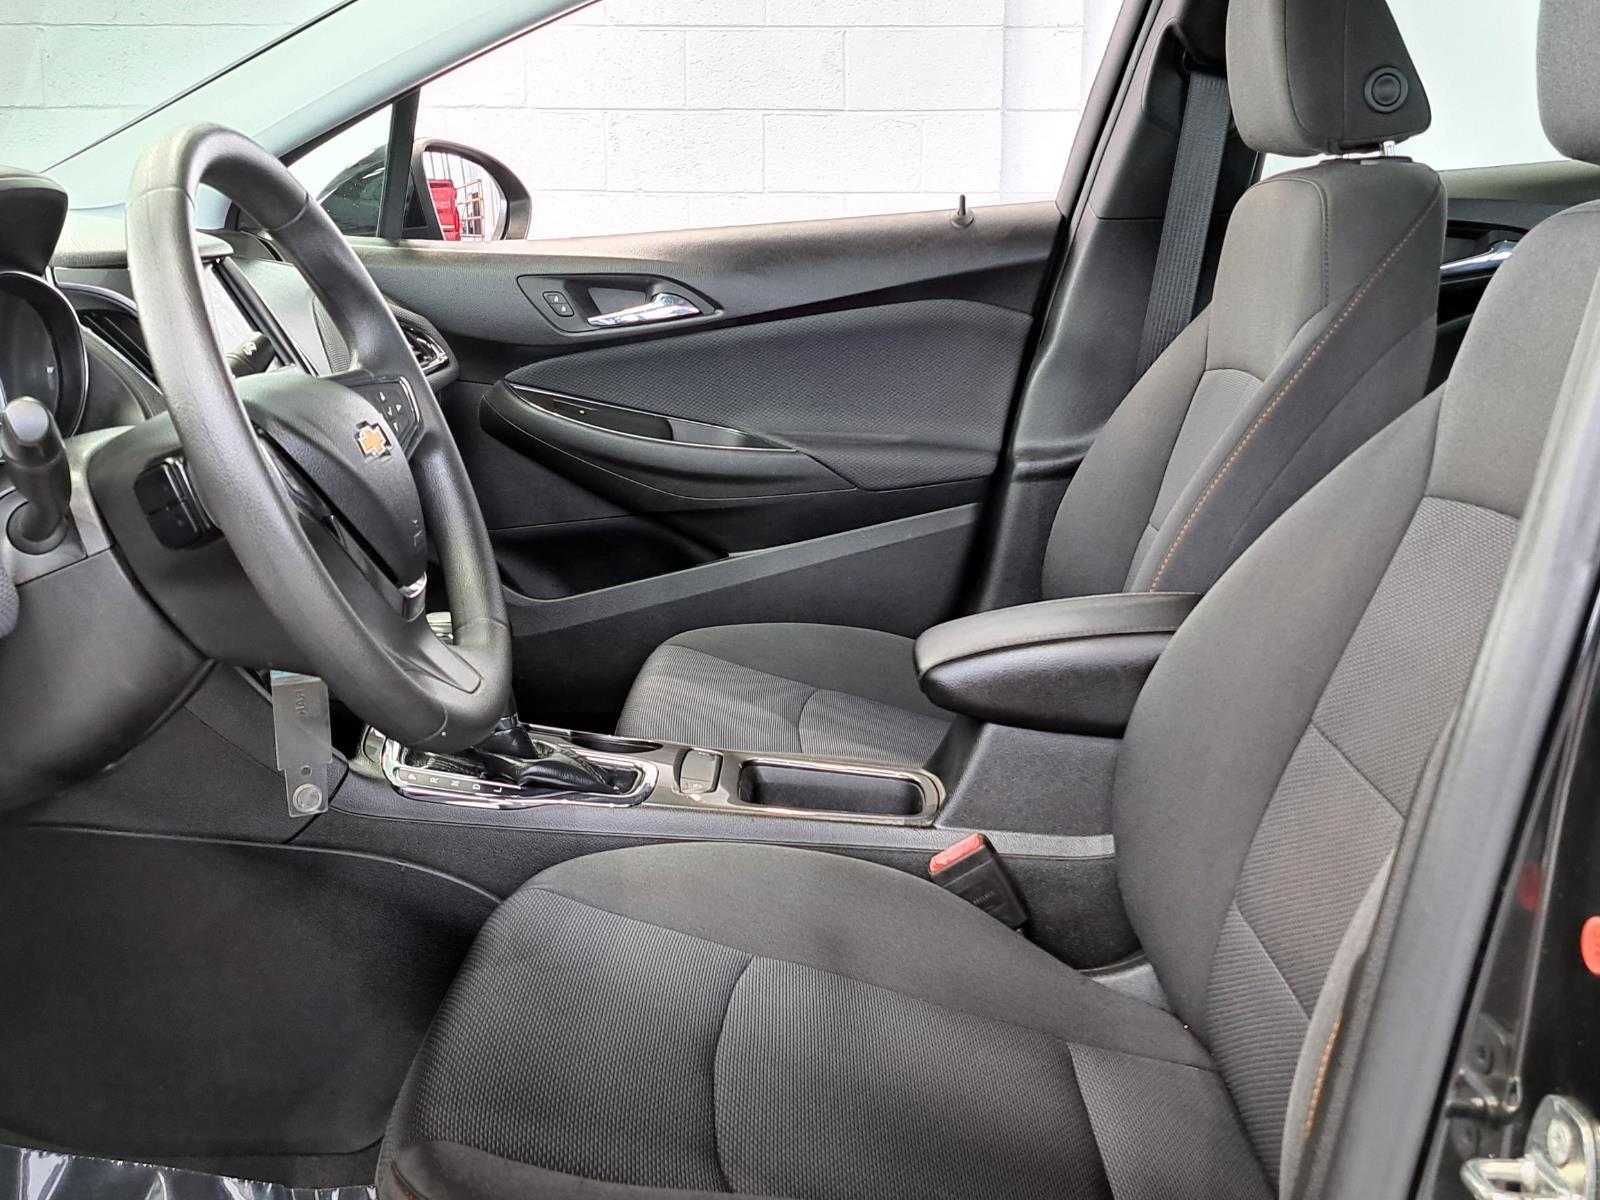 2019 Chevrolet Cruze LS Sedan 4 Dr. Front Wheel Drive 22